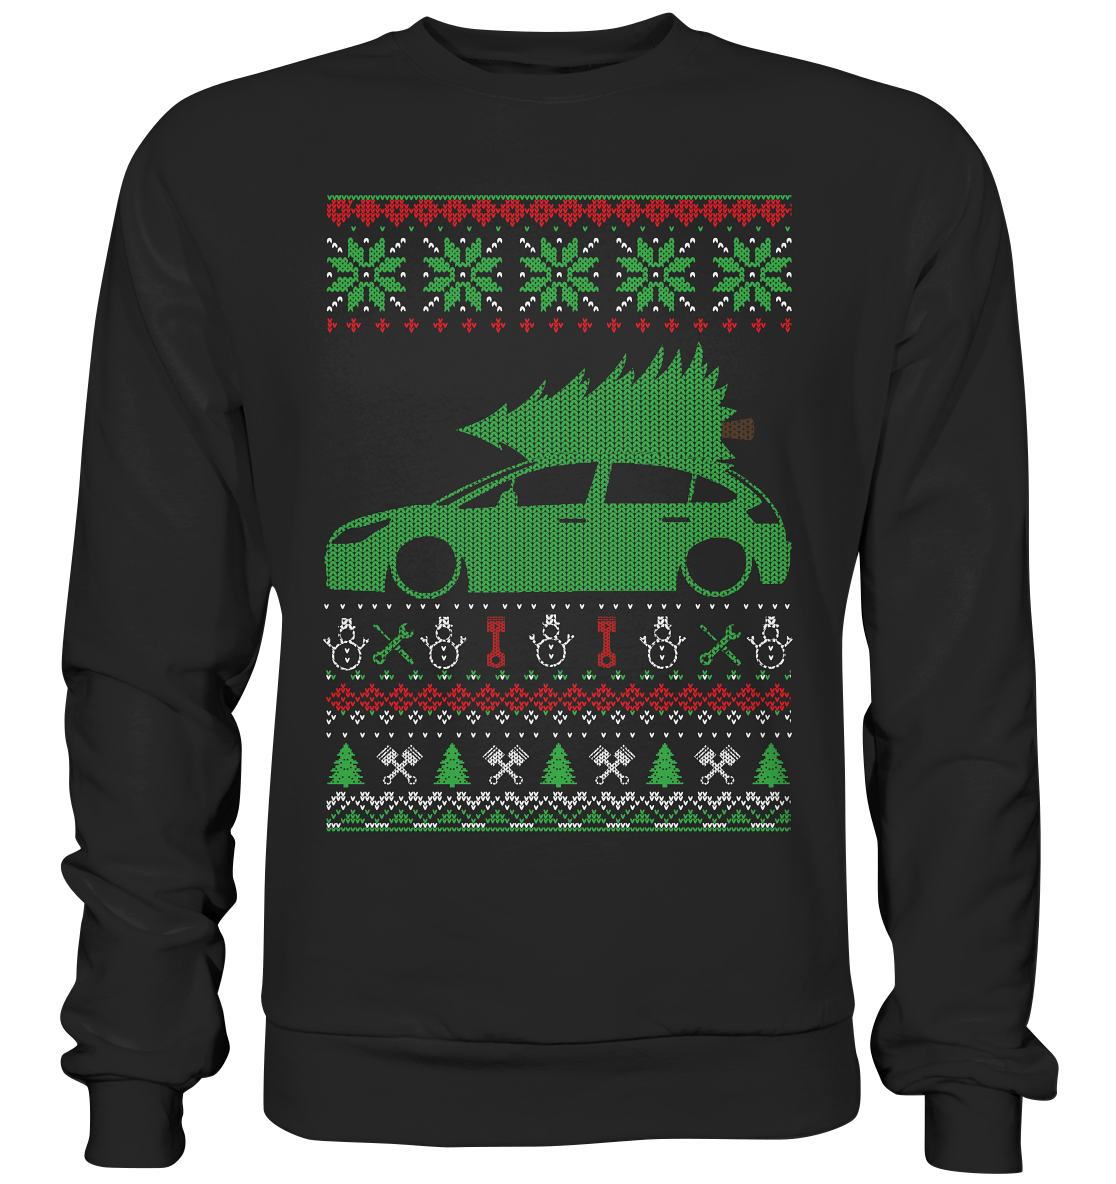 CODUGLY_CGKC45D - Premium Sweatshirt